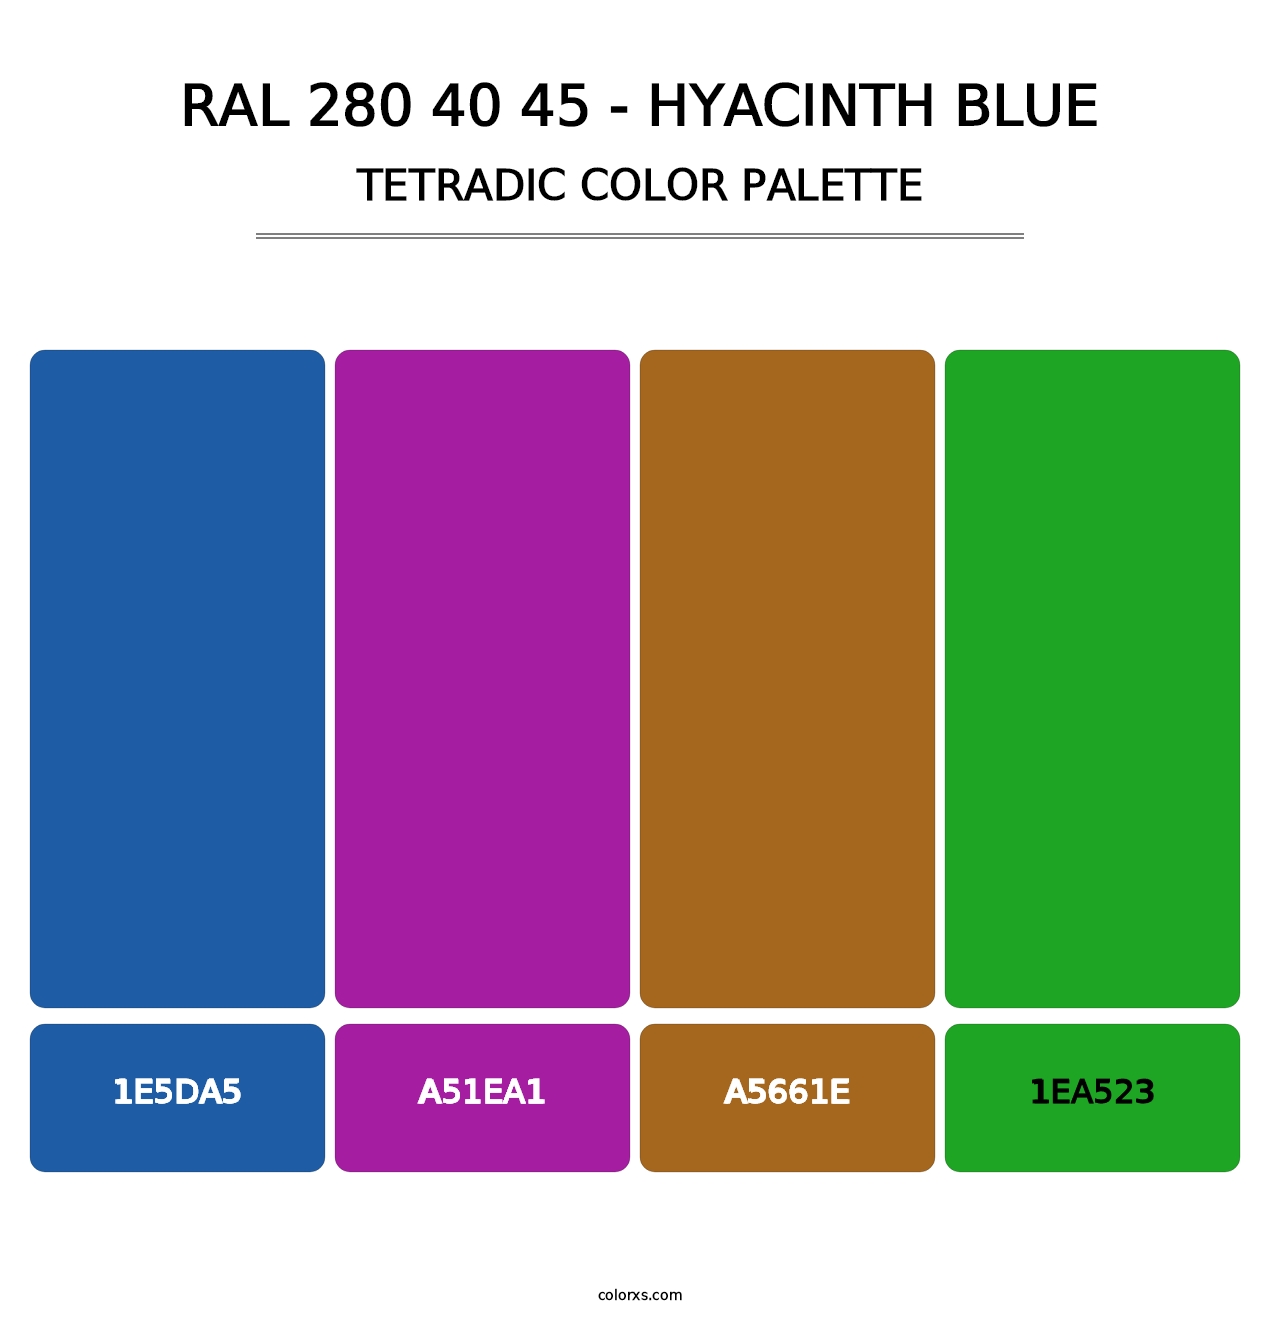 RAL 280 40 45 - Hyacinth Blue - Tetradic Color Palette